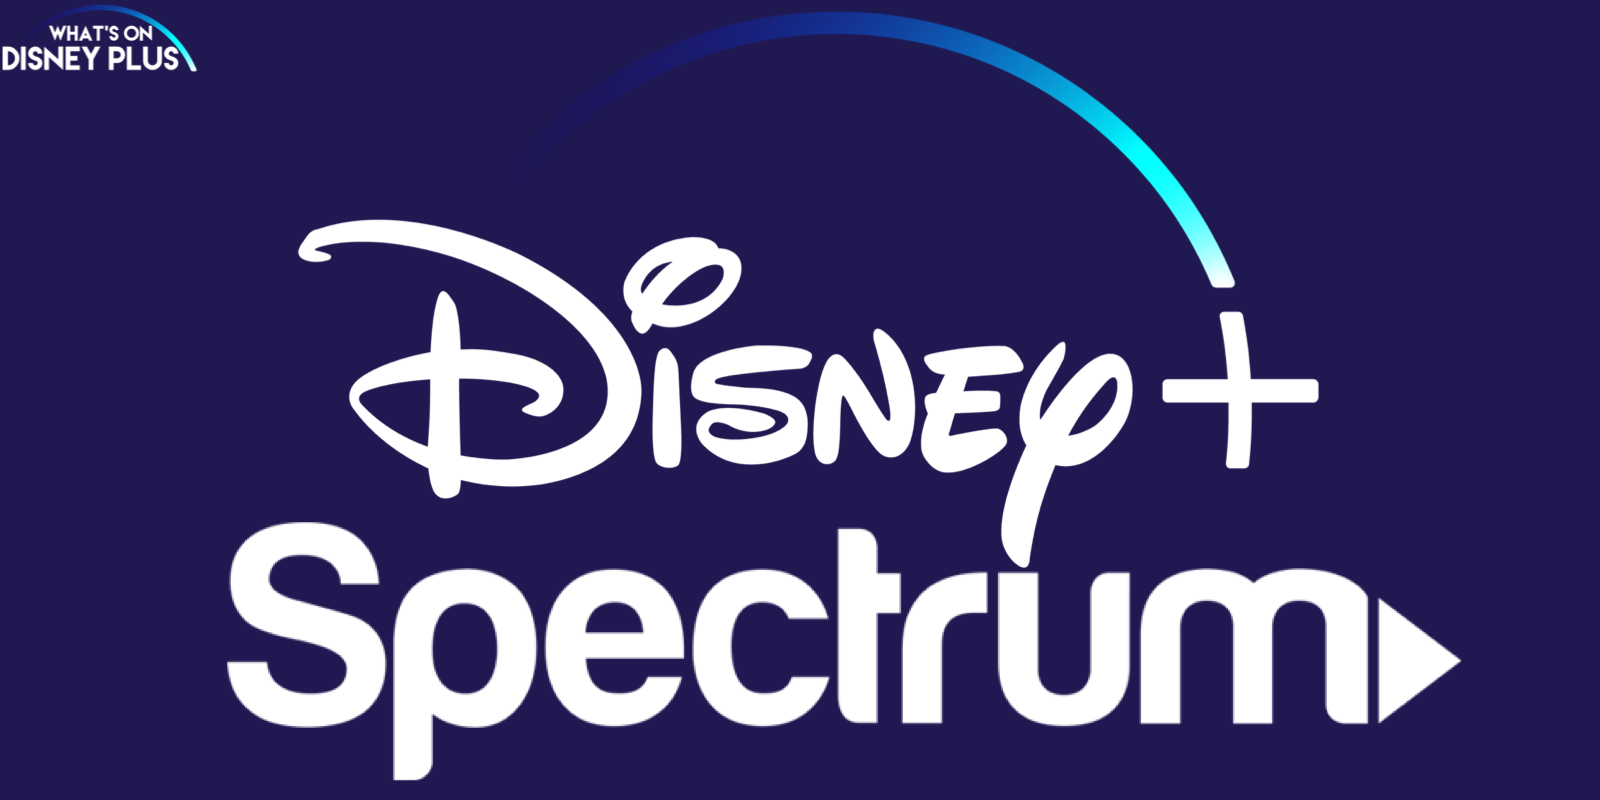 Disney+, Hulu and ESPN+ Coming Soon To Spectrum TV